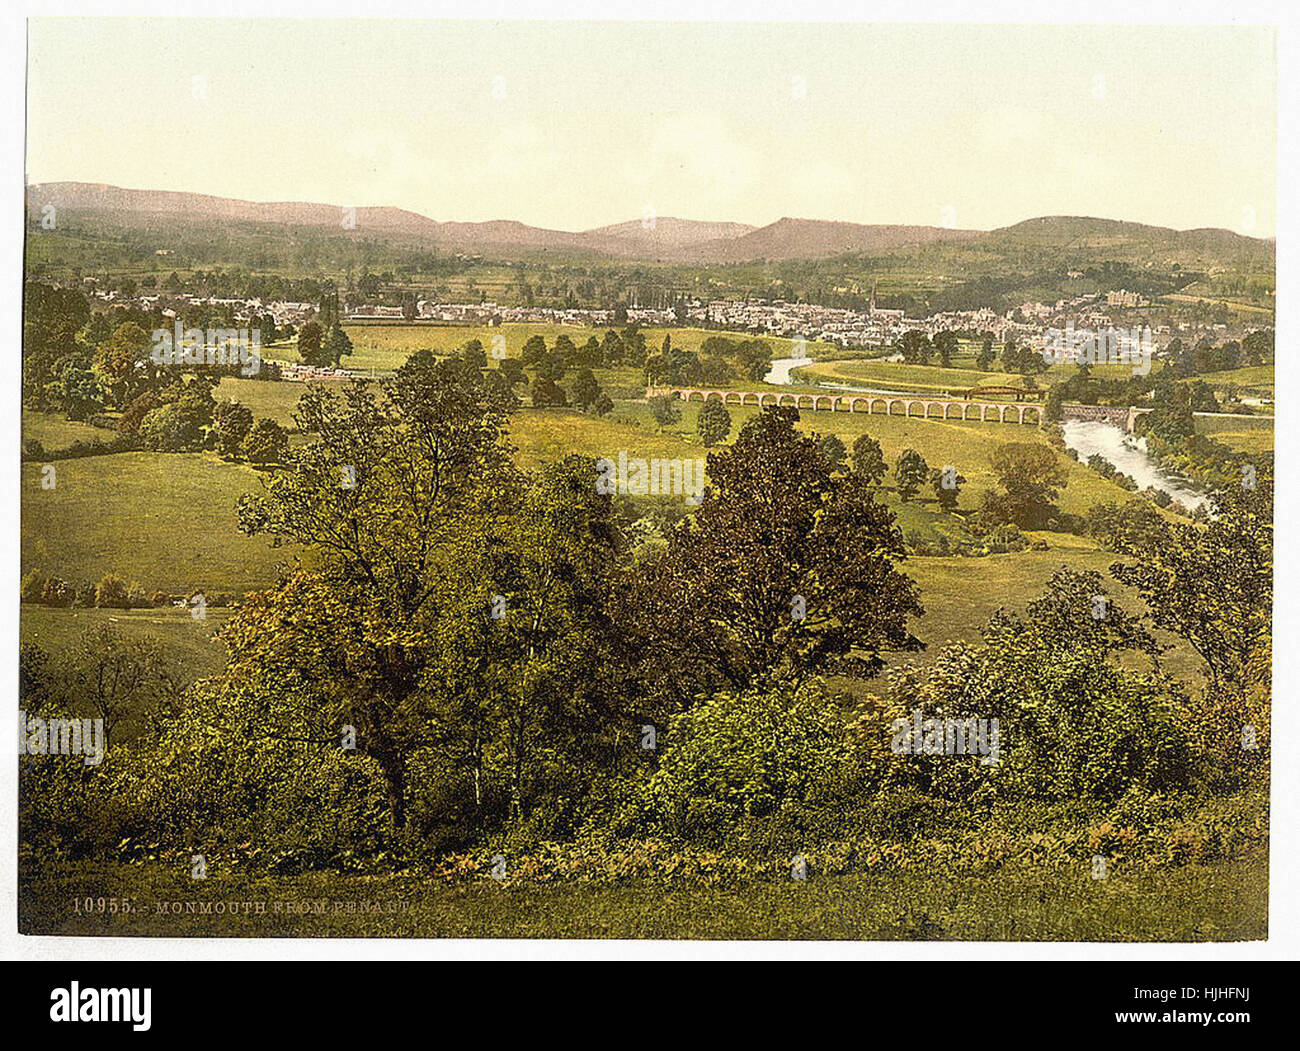 Von Penalt, Monmouth, Wales - Photochrom XIXth Jahrhundert Stockfoto